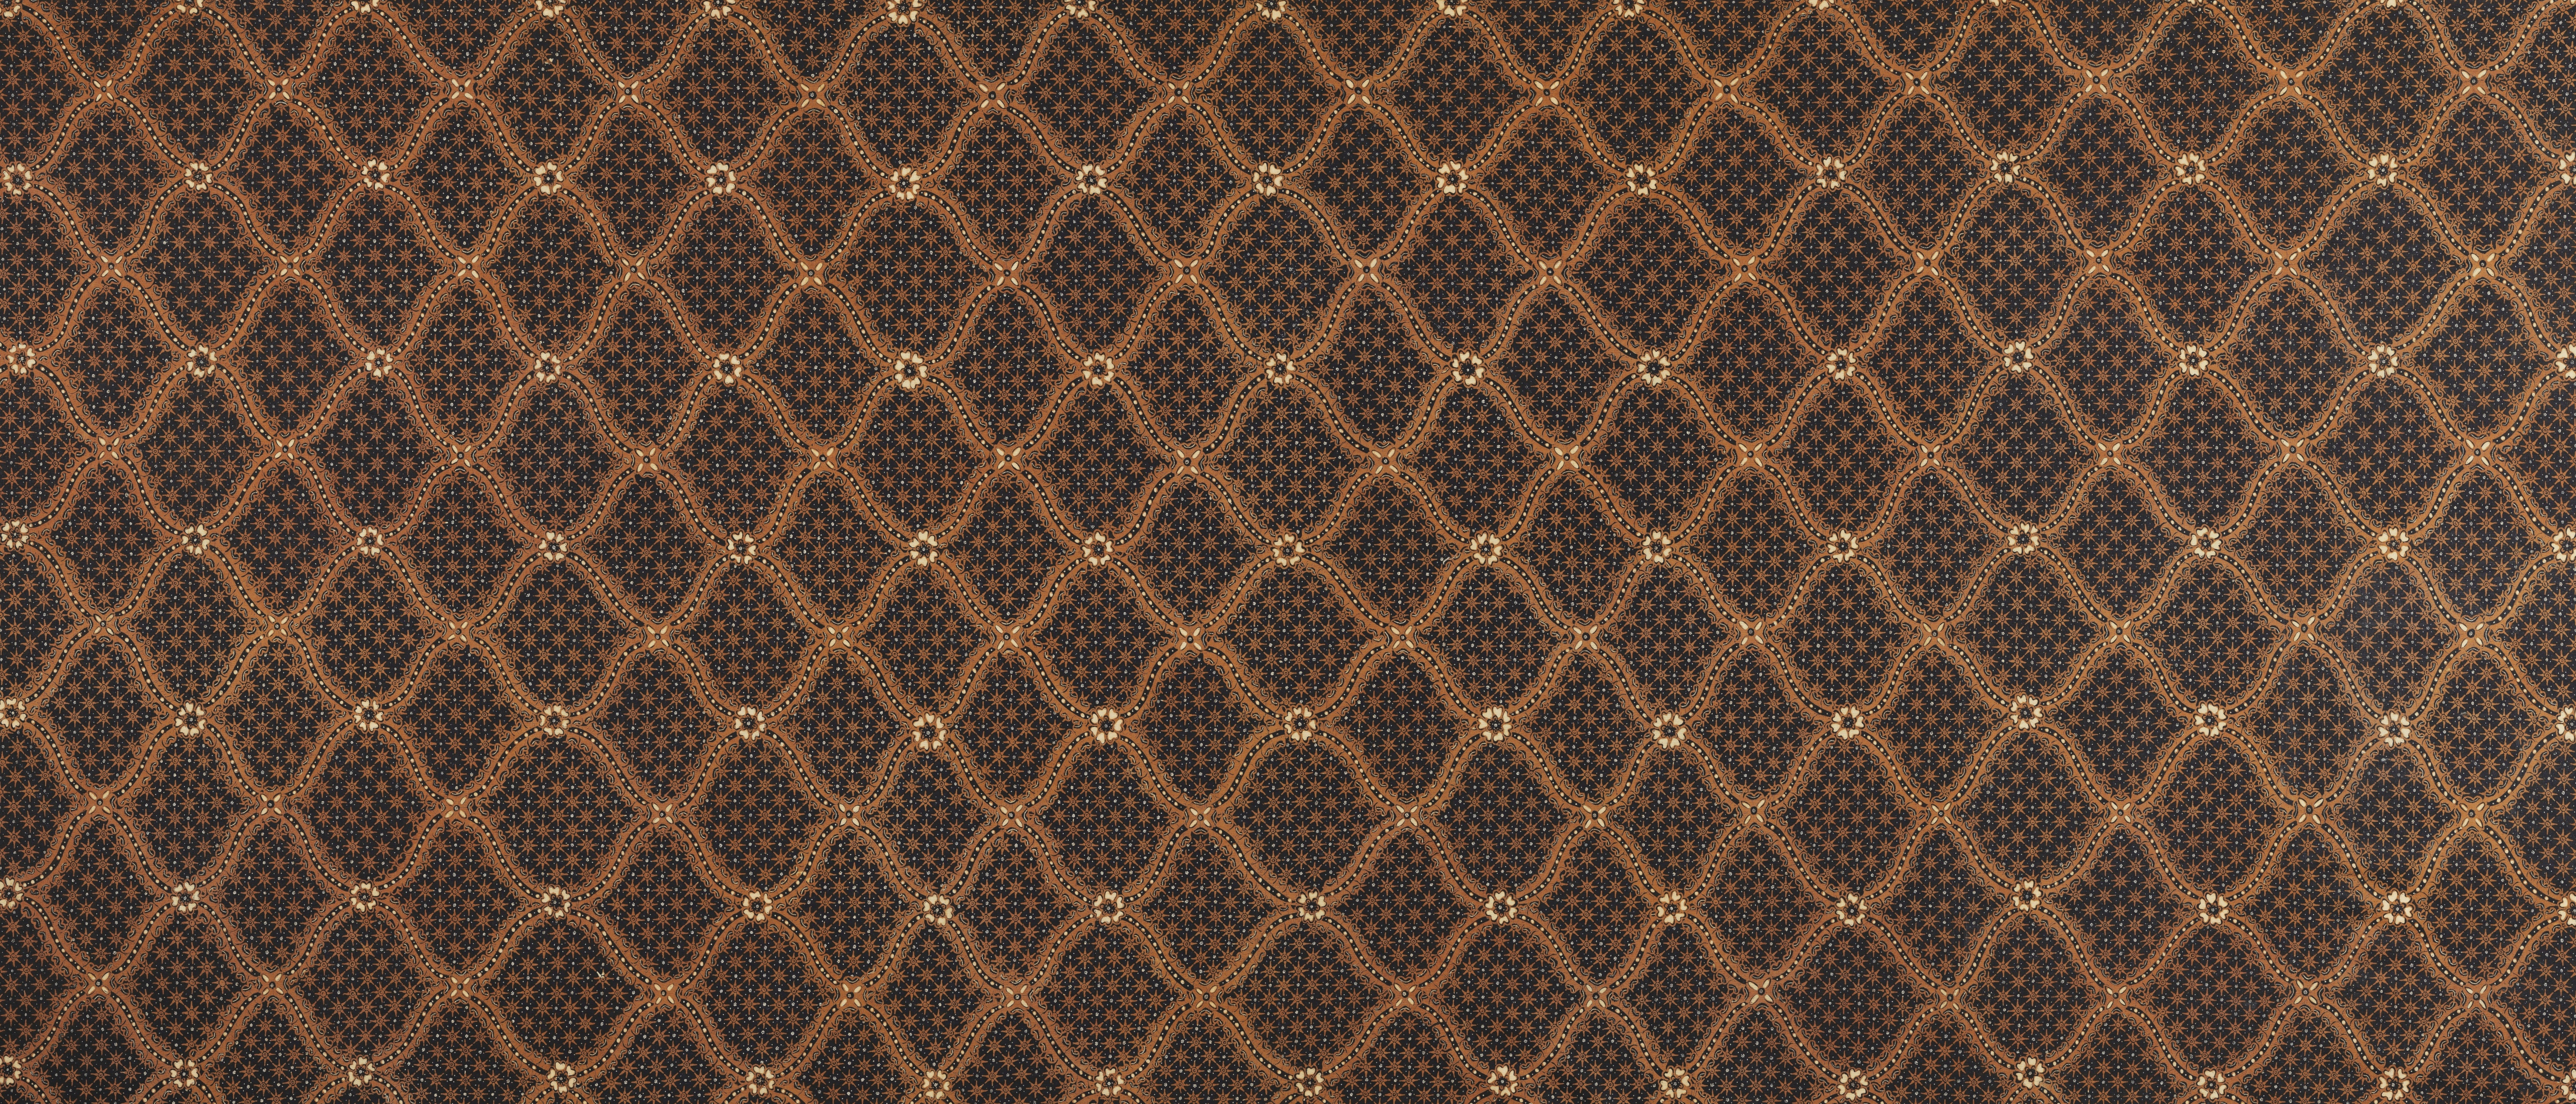 General 6049x2593 texture fabric ultrawide pattern